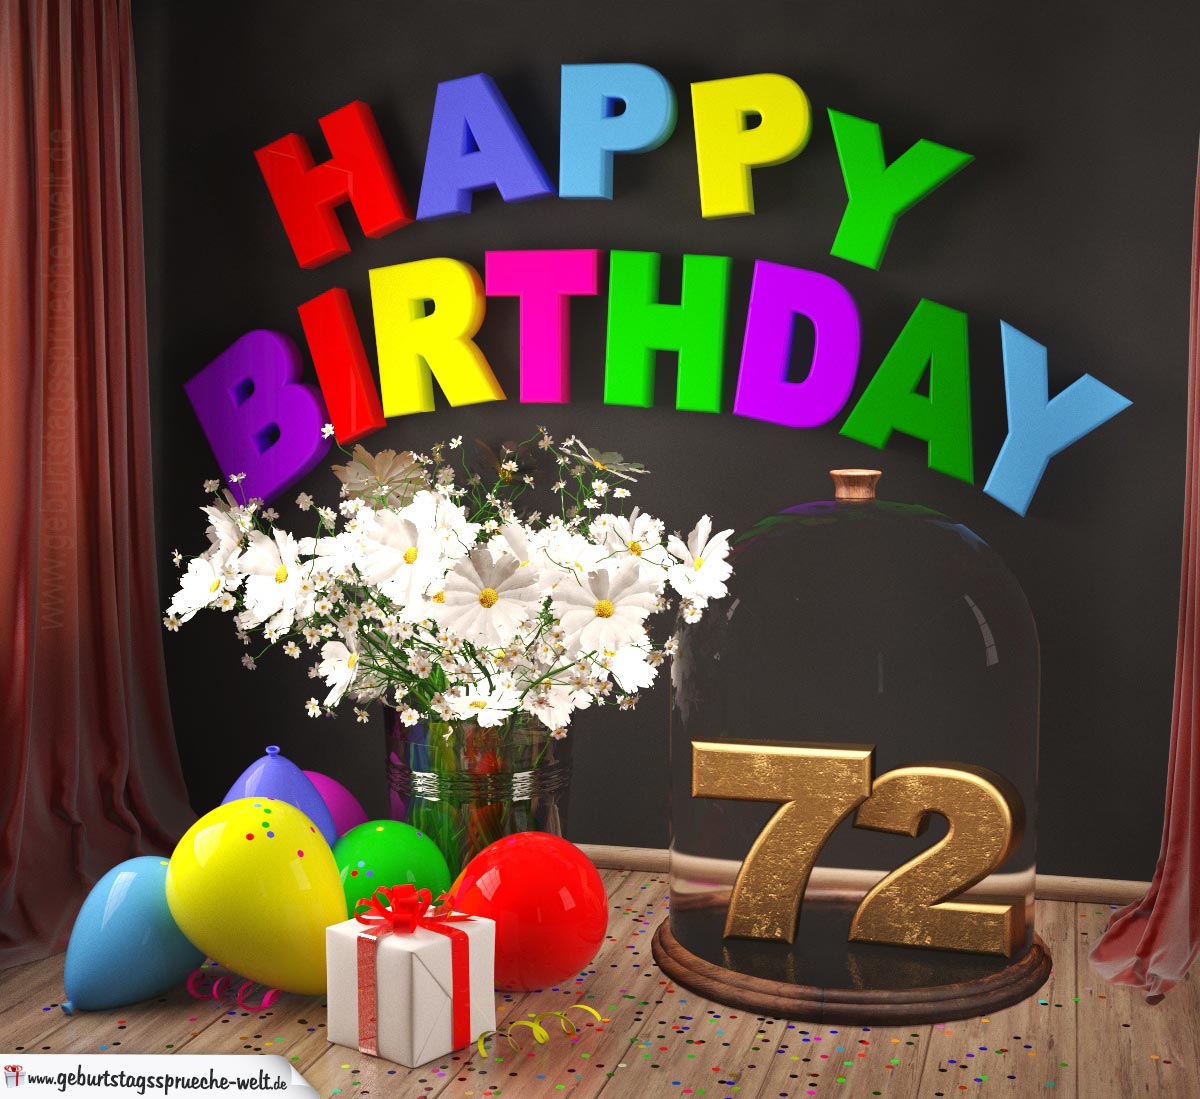 44+ Happy birthday 18 sprueche ideas in 2021 